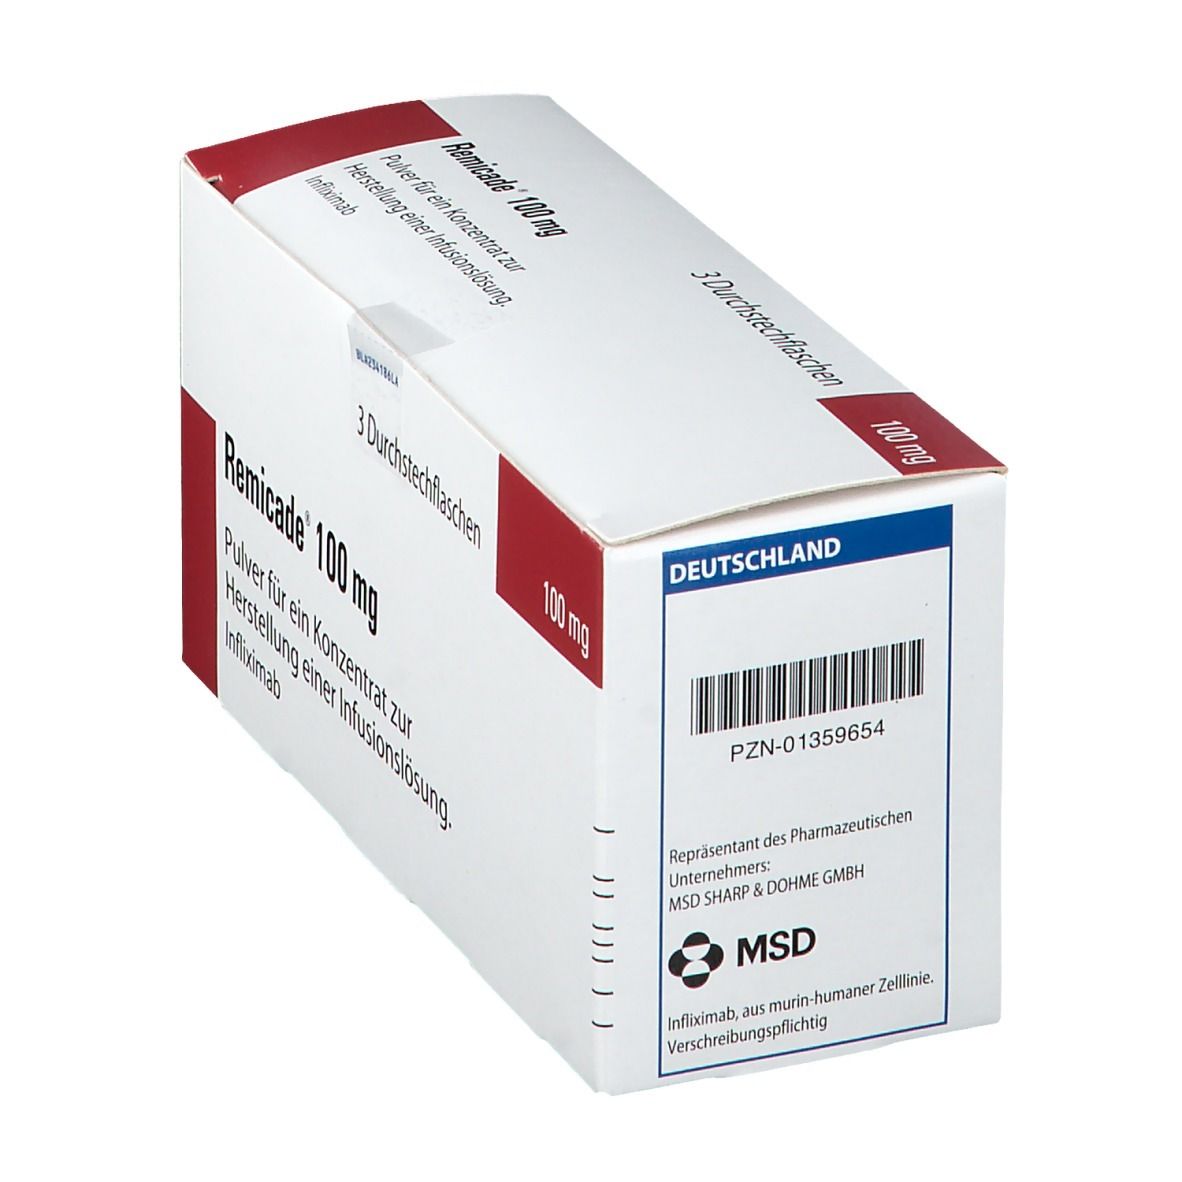 Remicade® 100 mg